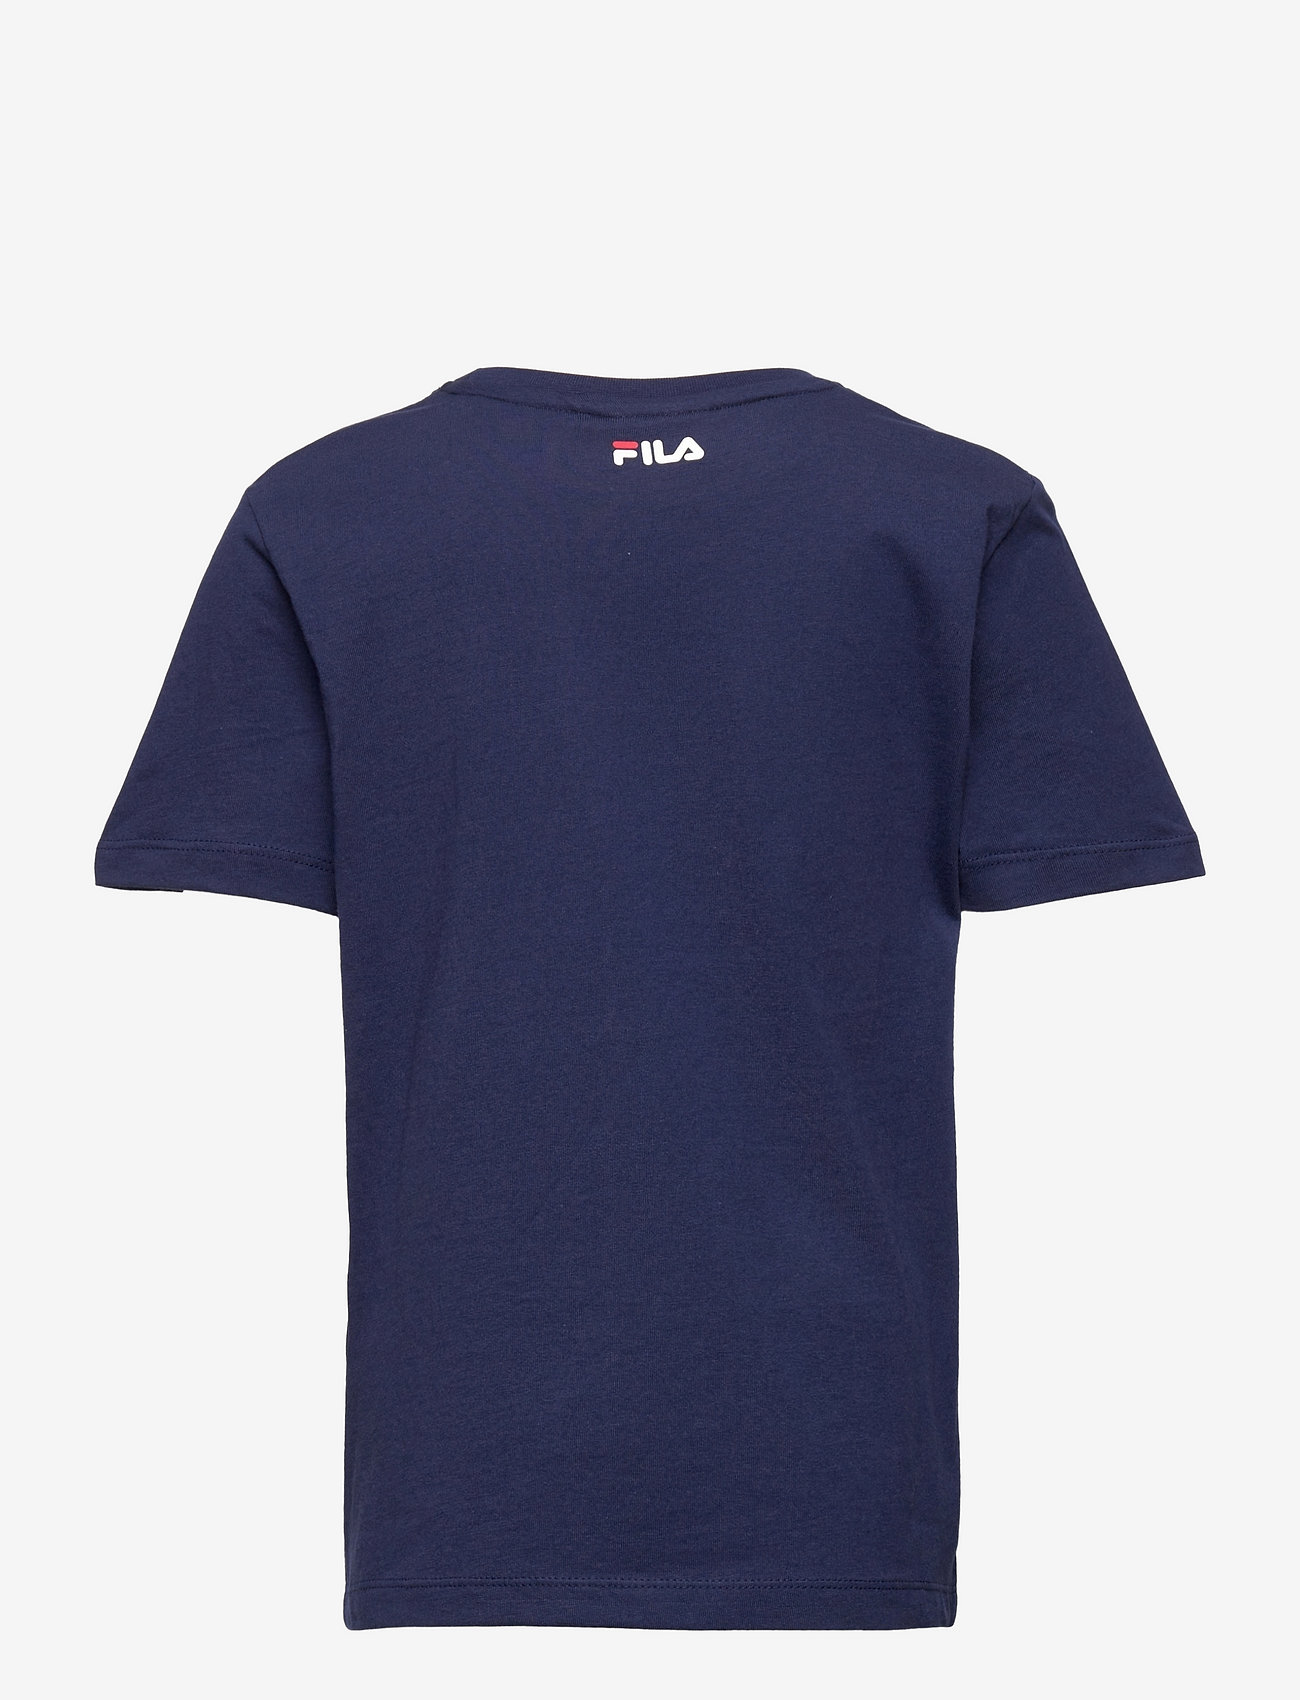 FILA - SOLBERG classic logo tee - pattern short-sleeved t-shirt - medieval blue - 1